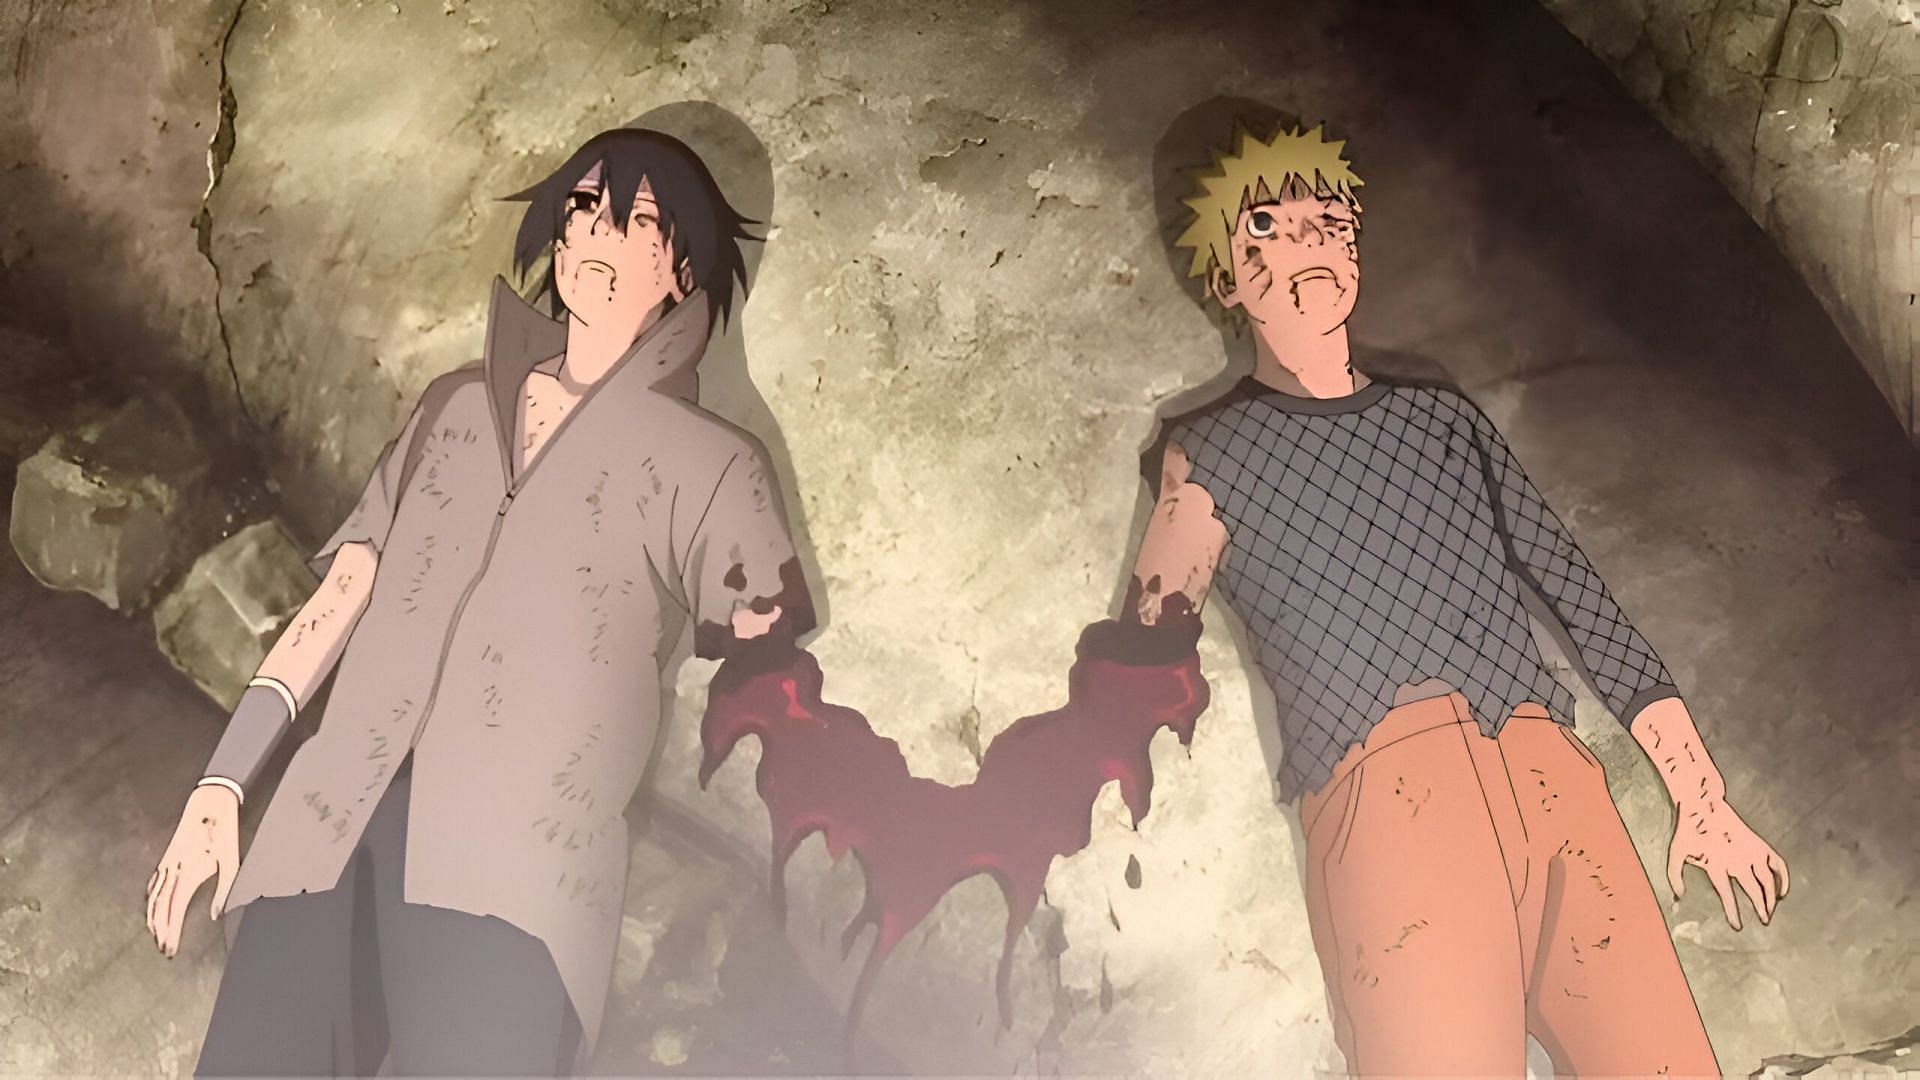 Naruto (left) and Sasuke (right) (Image via Studio Pierrot)